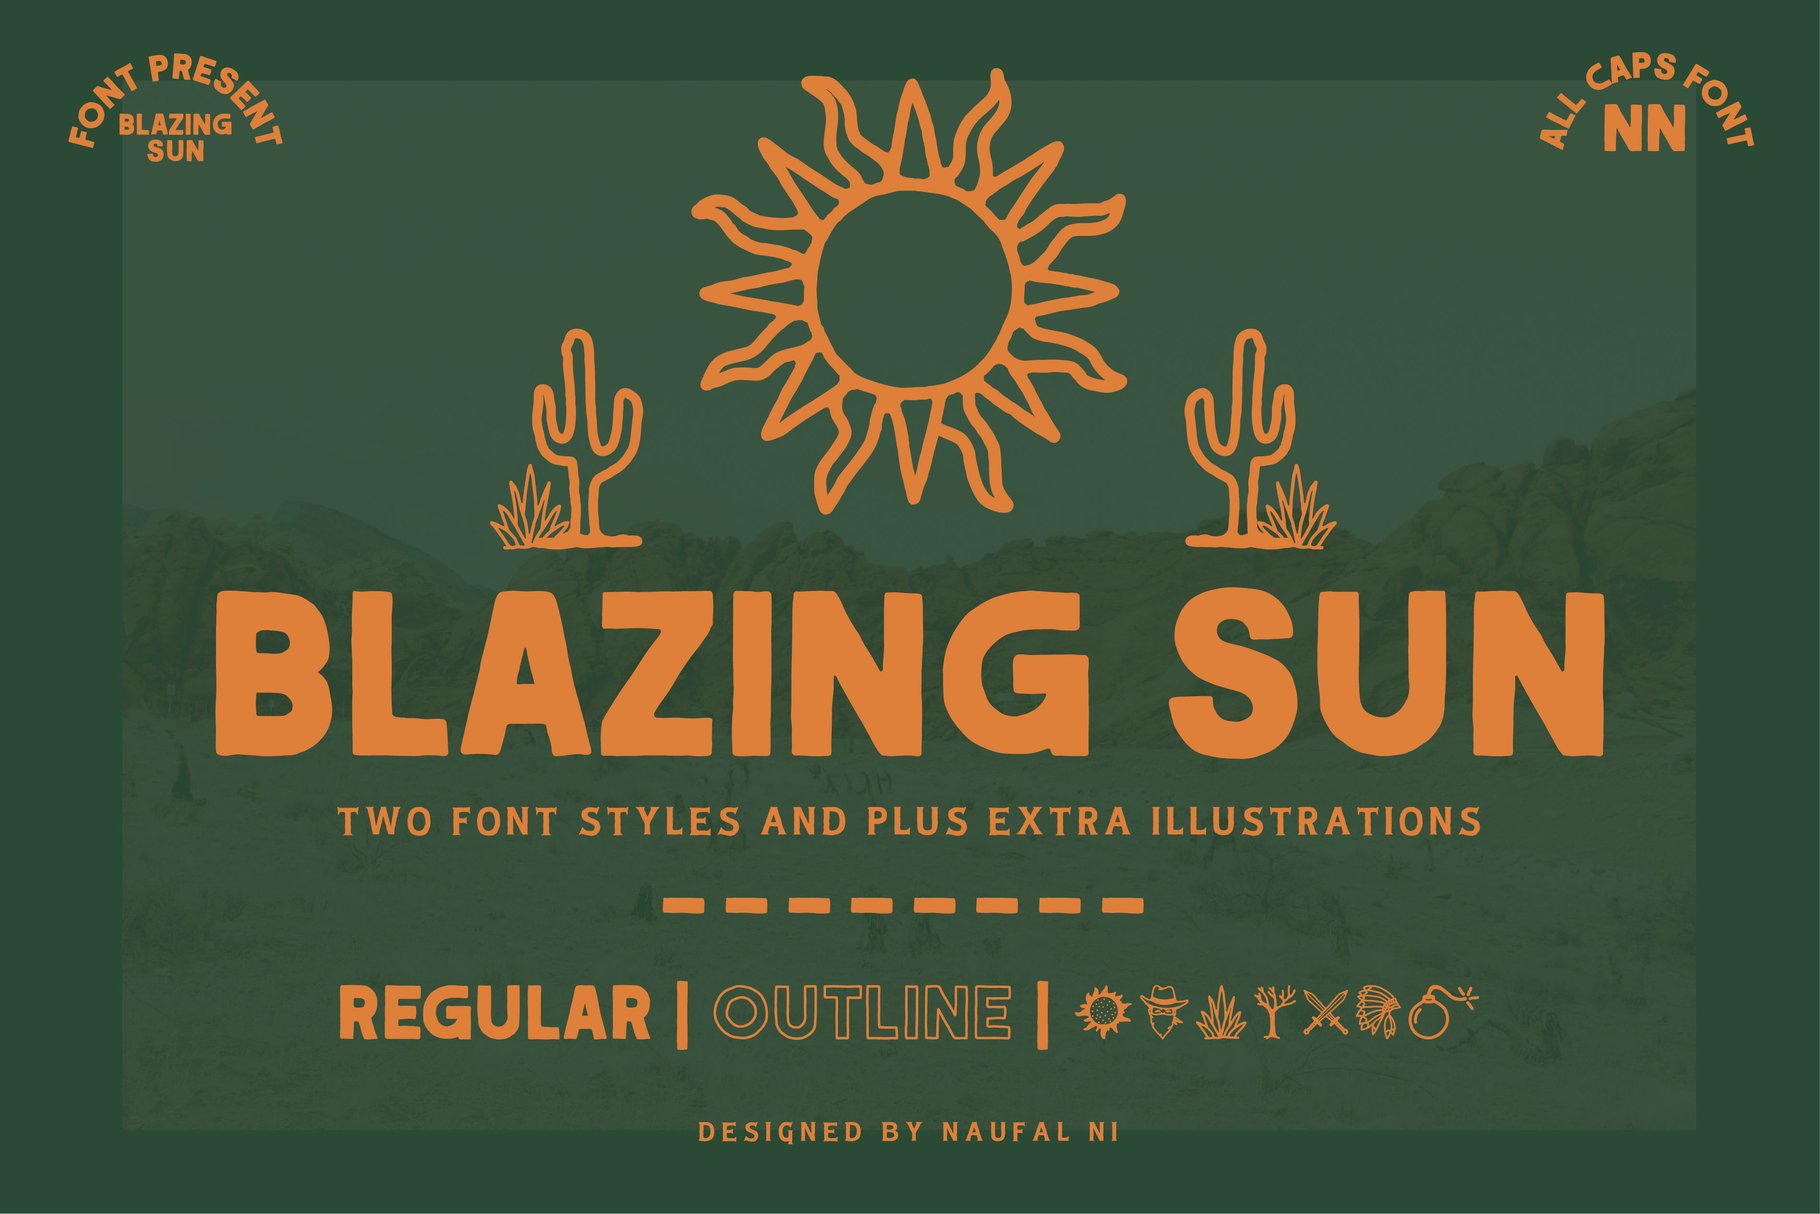 BLAZING SUN - Extra Illustrations cover image.